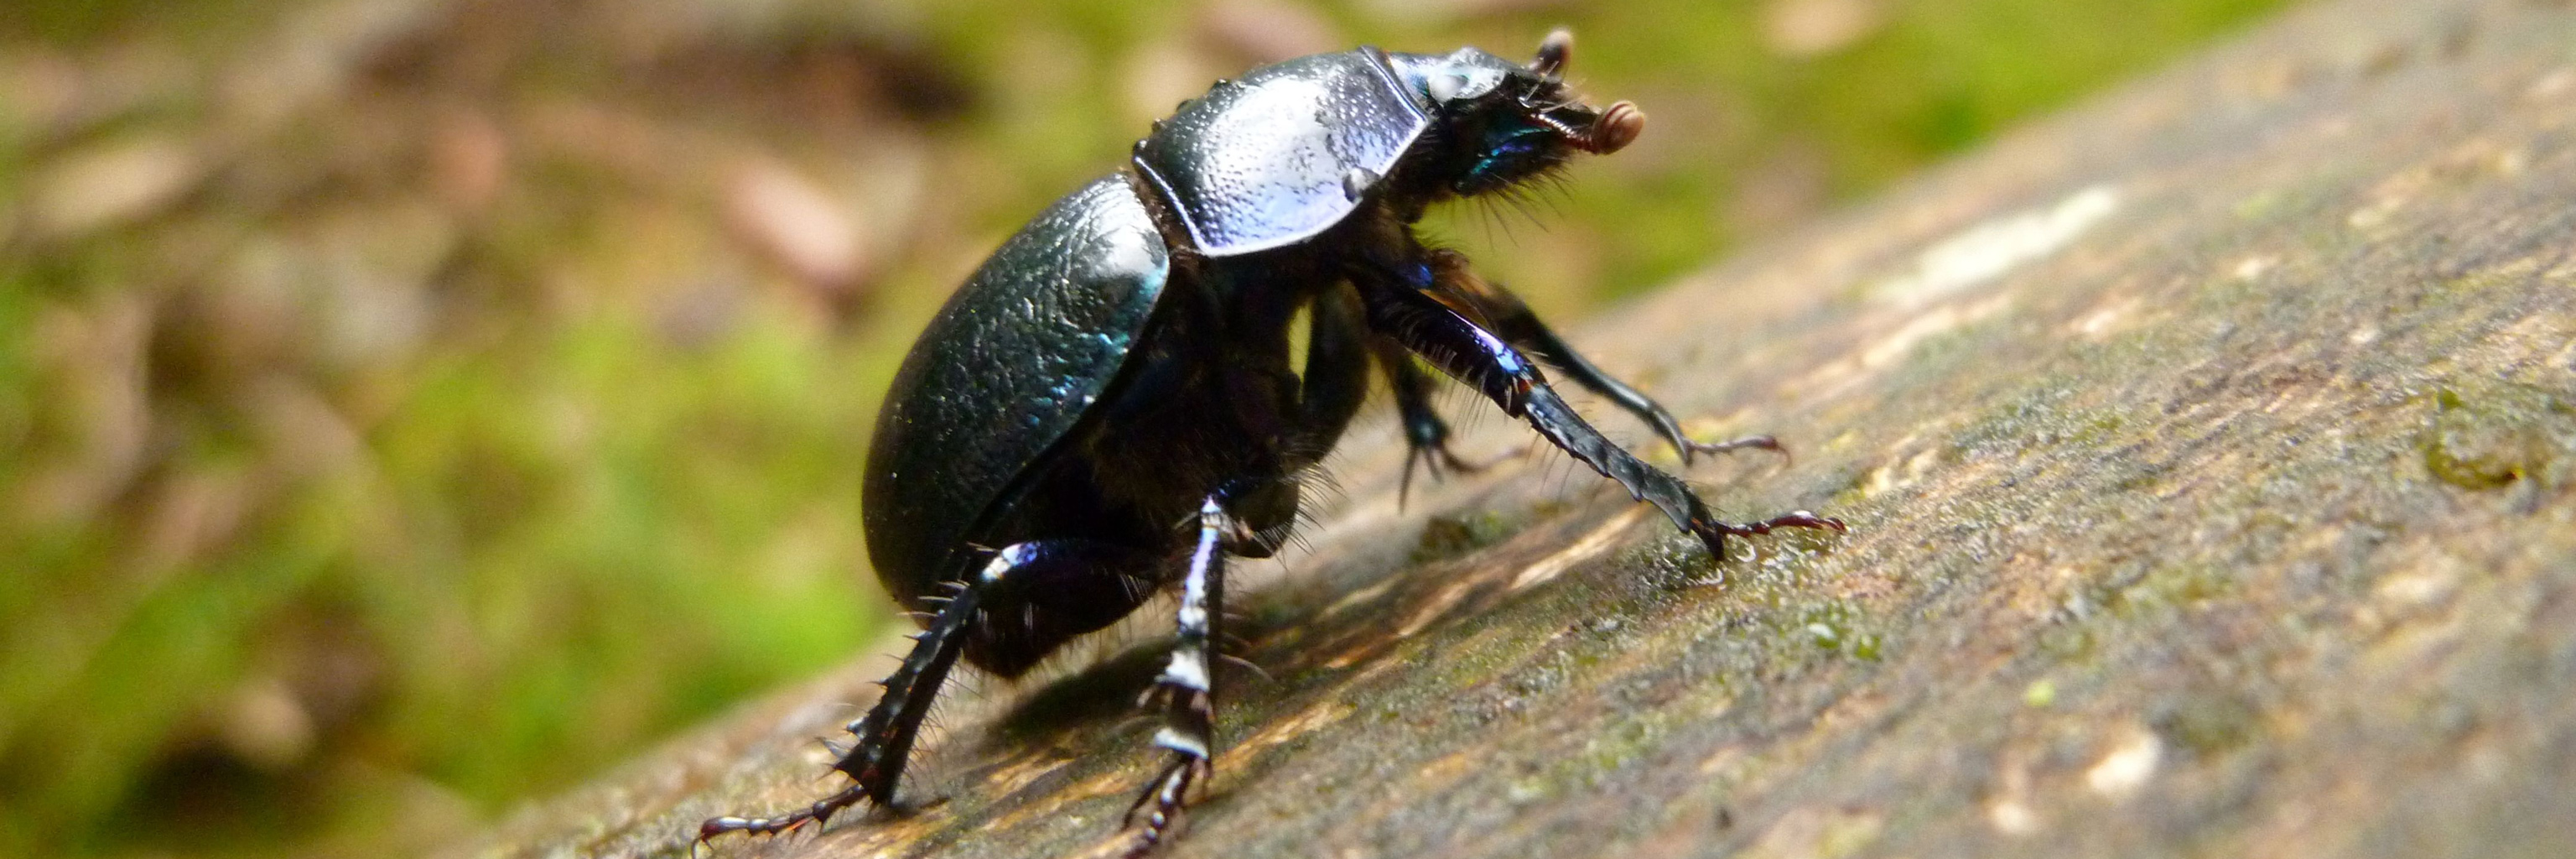 Beetle walking on a log